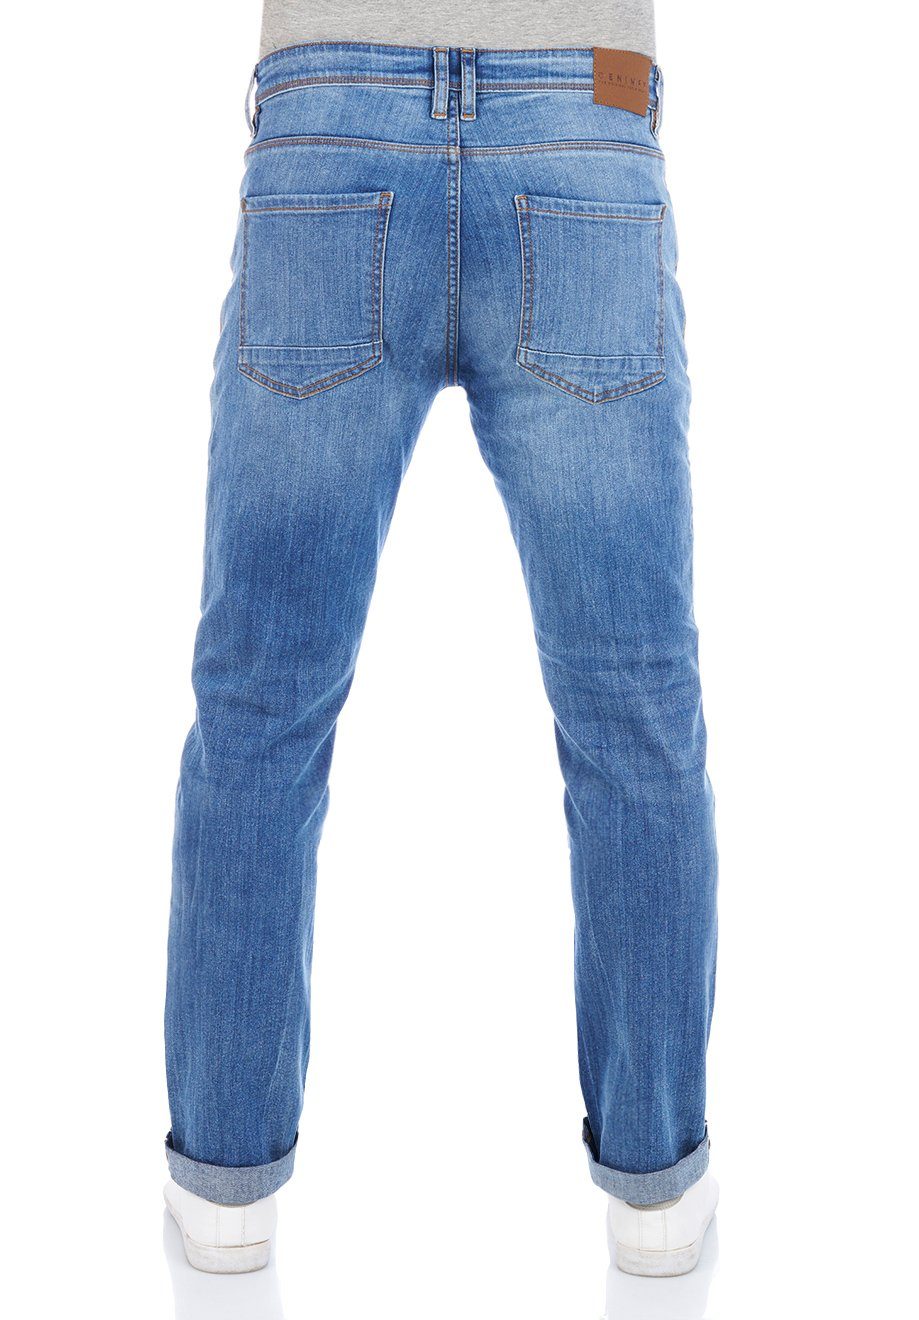 Jeanshose Straight DFMiro Blue Straight-Jeans Stretch Herren Middle DENIMFY (M236) mit Jeanshose Denim Fit